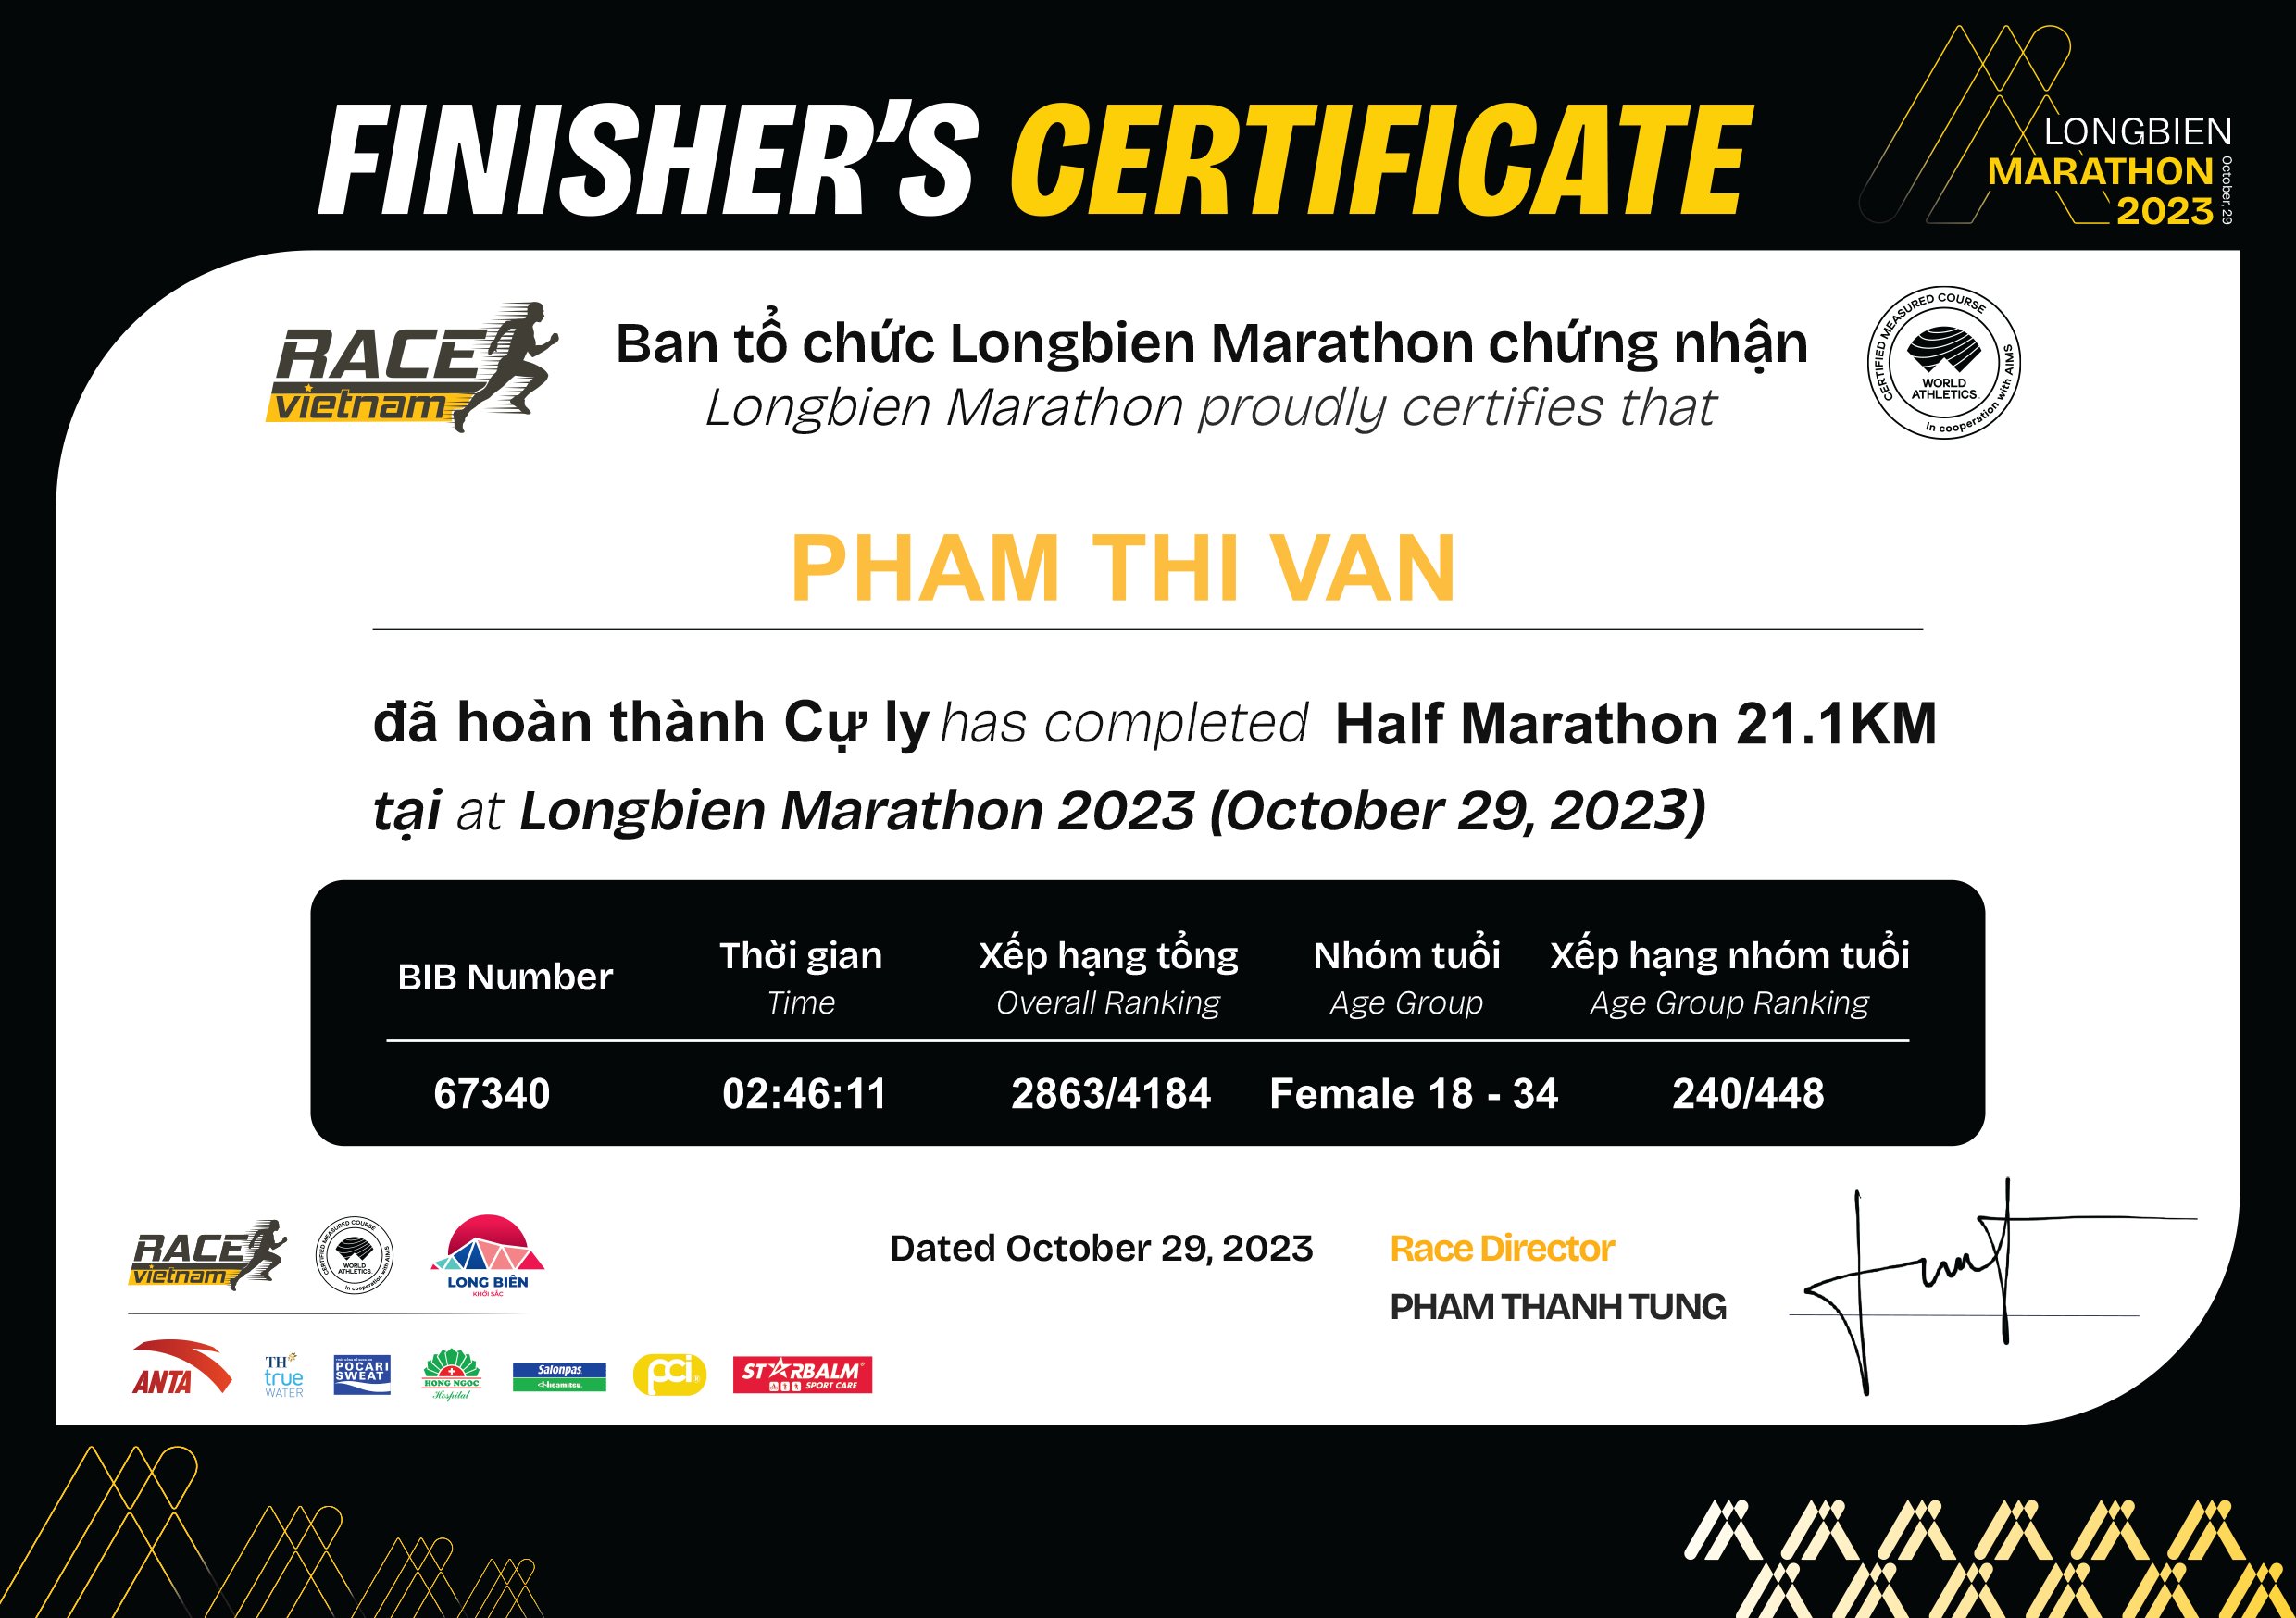 67340 - Pham Thi Van